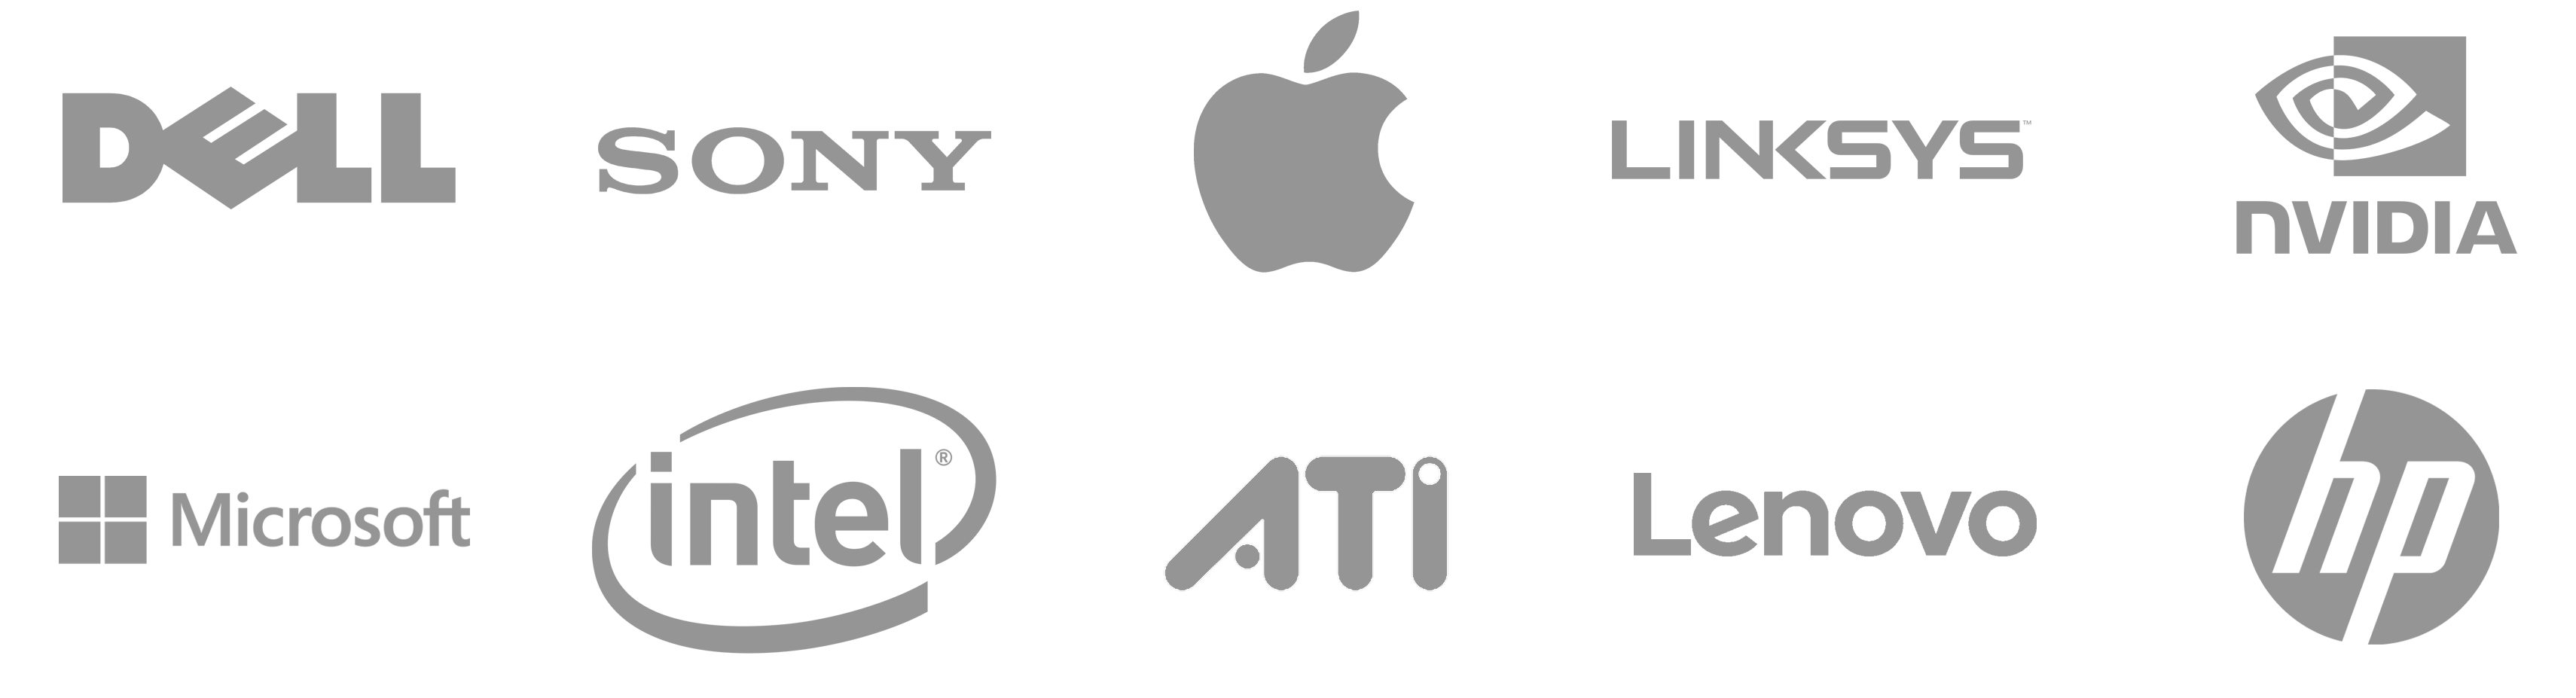 Distributors logos